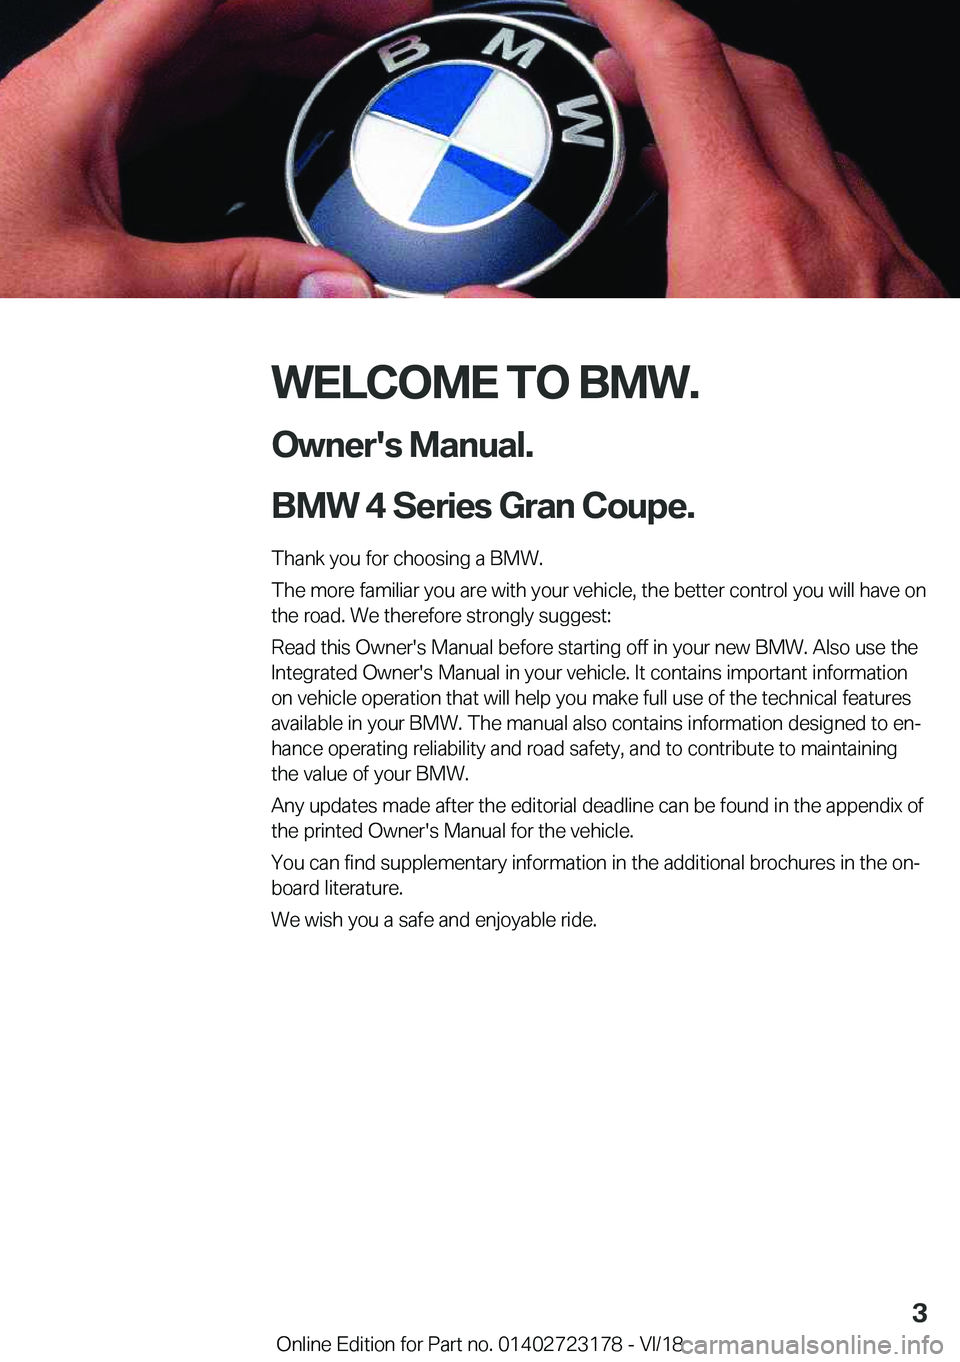 BMW 4 SERIES COUPE 2019  Owners Manual �W�E�L�C�O�M�E��T�O��B�M�W�.�O�w�n�e�r�'�s��M�a�n�u�a�l�.
�B�M�W��4��S�e�r�i�e�s��G�r�a�n��C�o�u�p�e�.�
�T�h�a�n�k��y�o�u��f�o�r��c�h�o�o�s�i�n�g��a��B�M�W�.
�T�h�e��m�o�r�e��f�a�m�